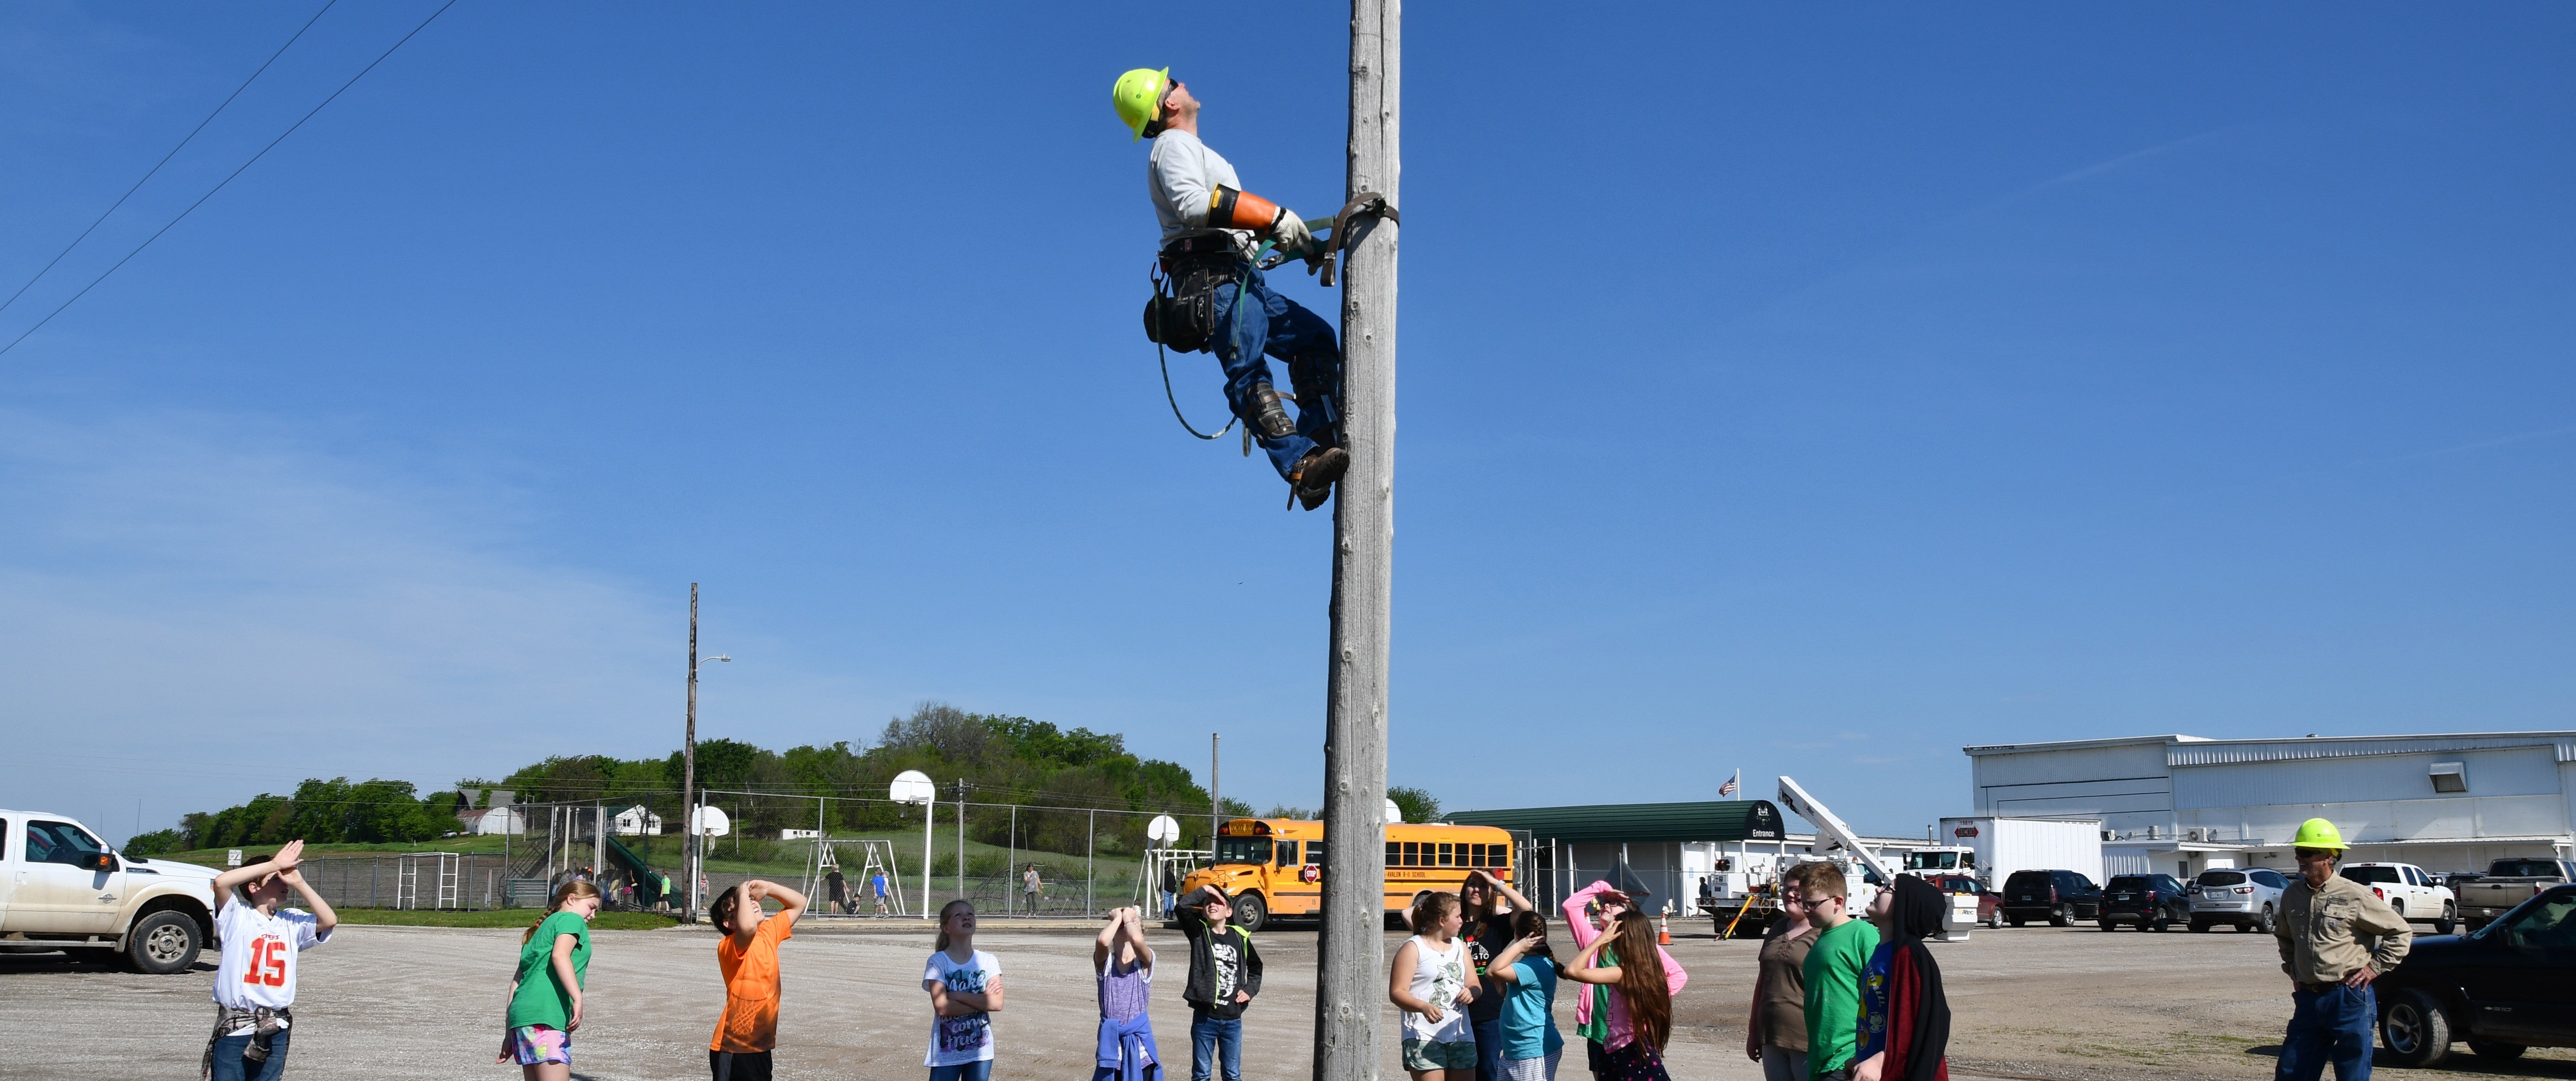 Lineman climbing an electric pole